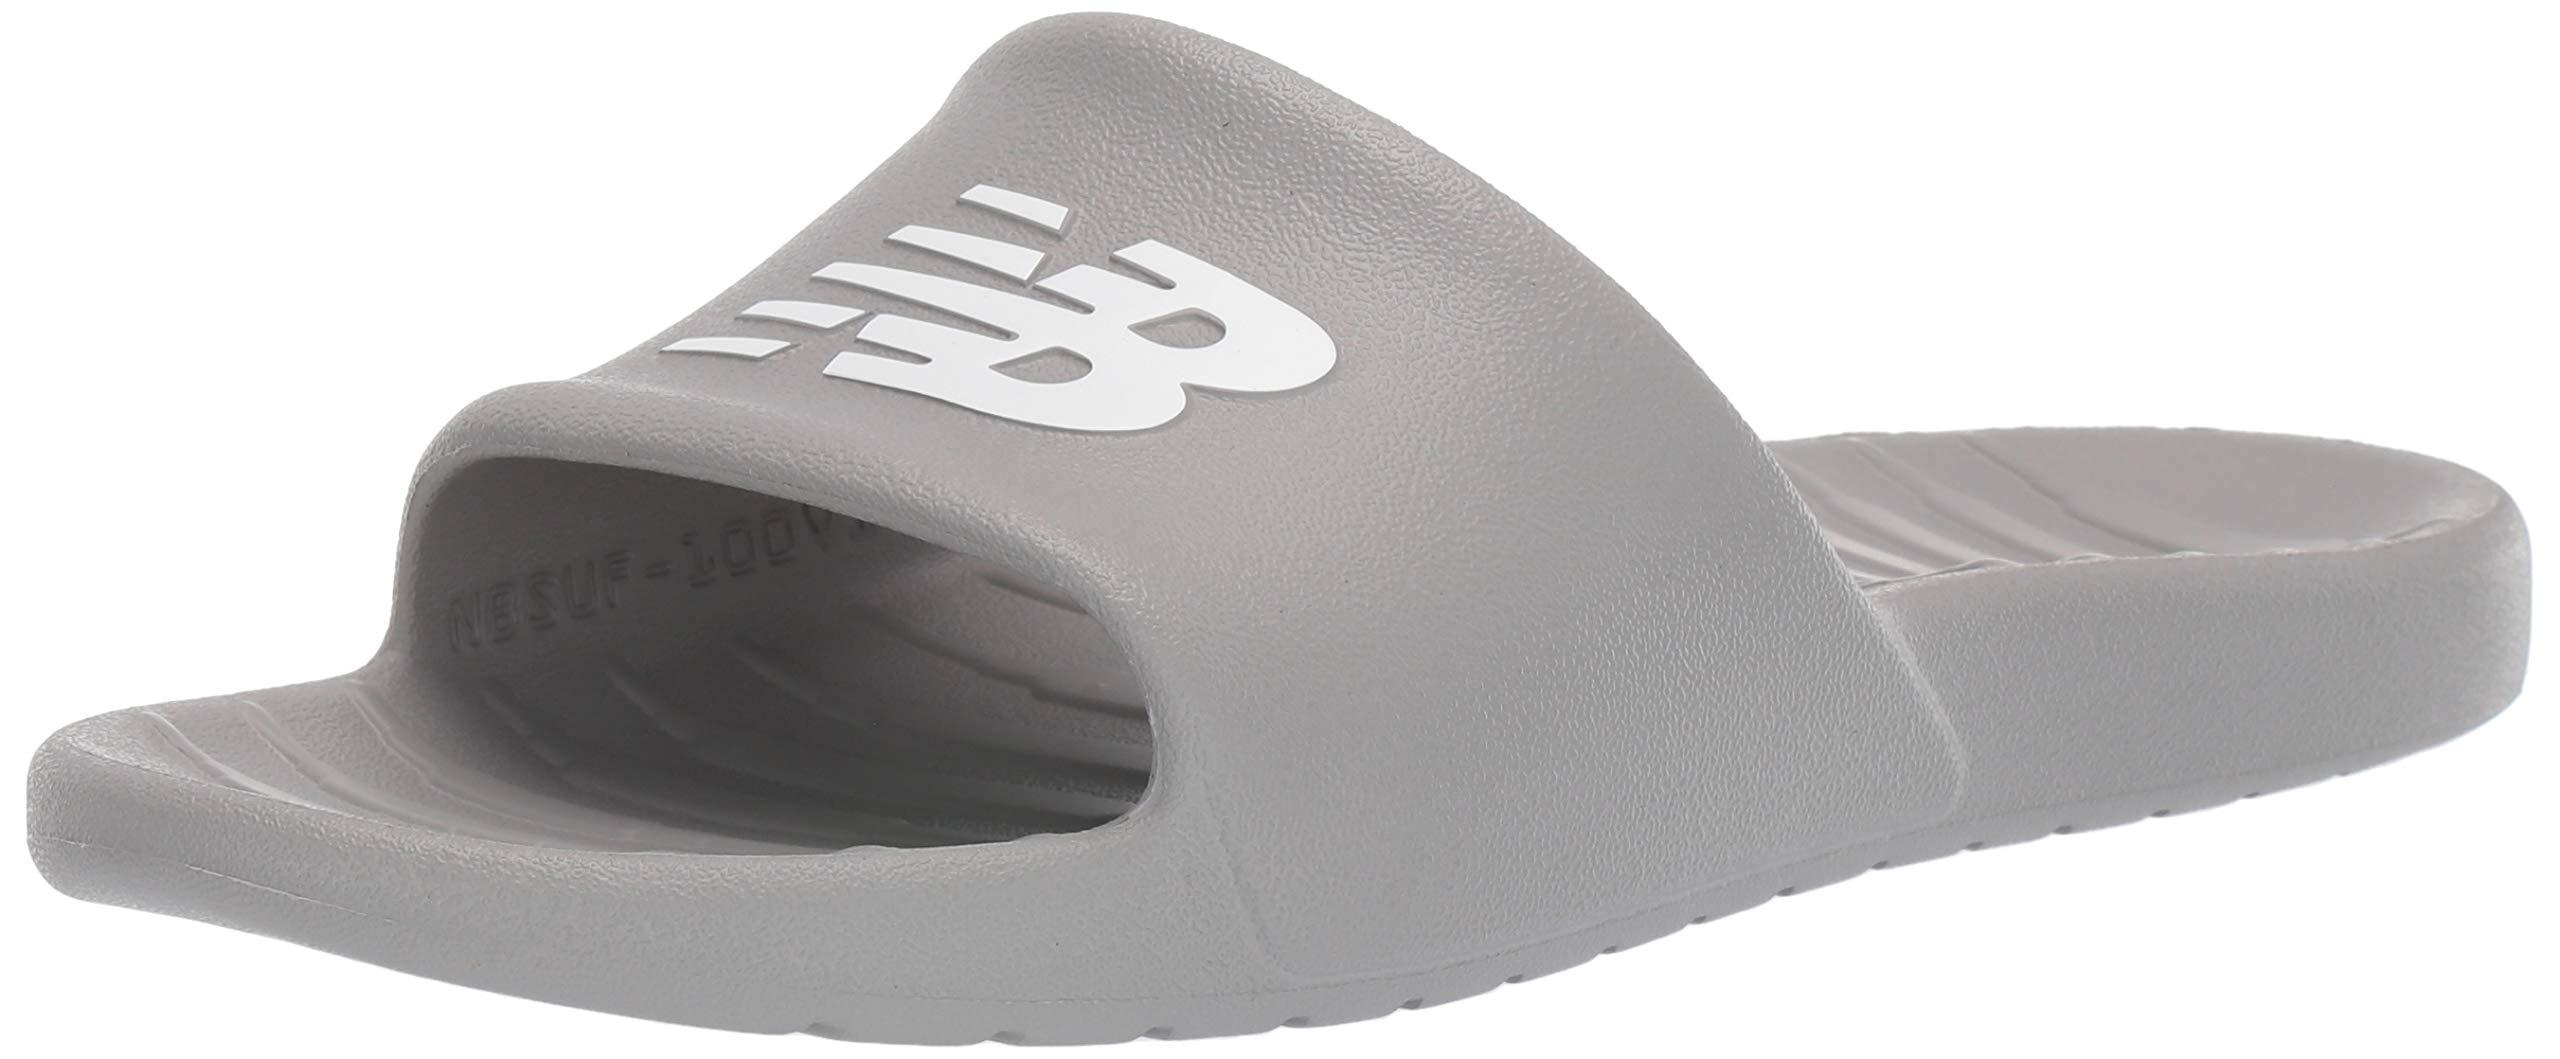 New Balance 100 V1 Slide Sandal in Grey/Grey (Gray) for Men - Save 41% -  Lyst